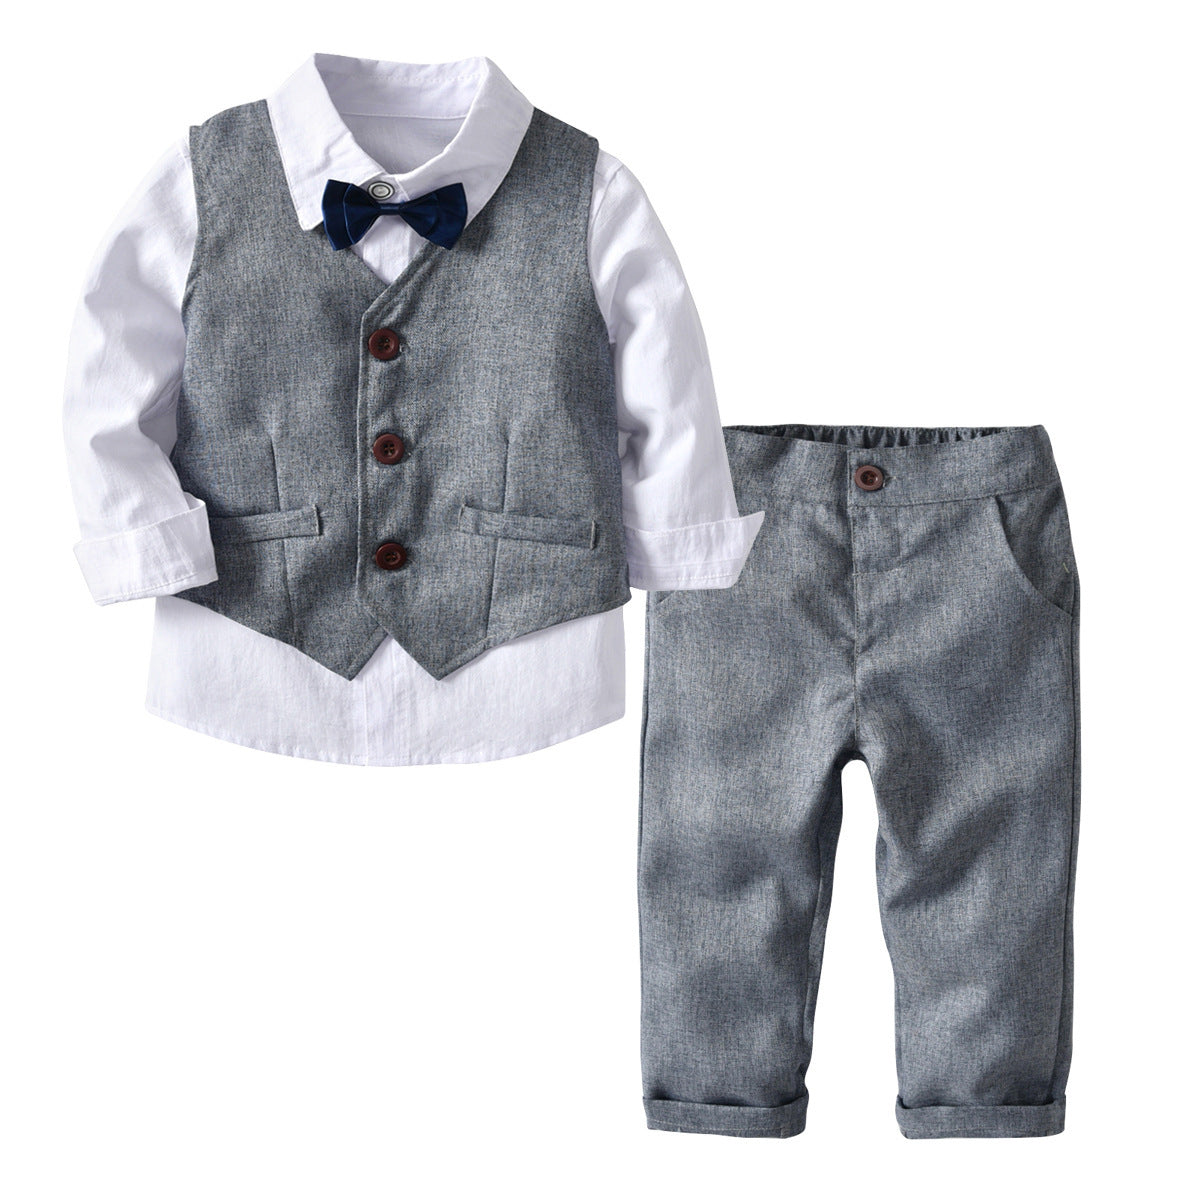 Baby-Jungen-Set, passt zu Weddin, formelles 2-teiliges Outfit